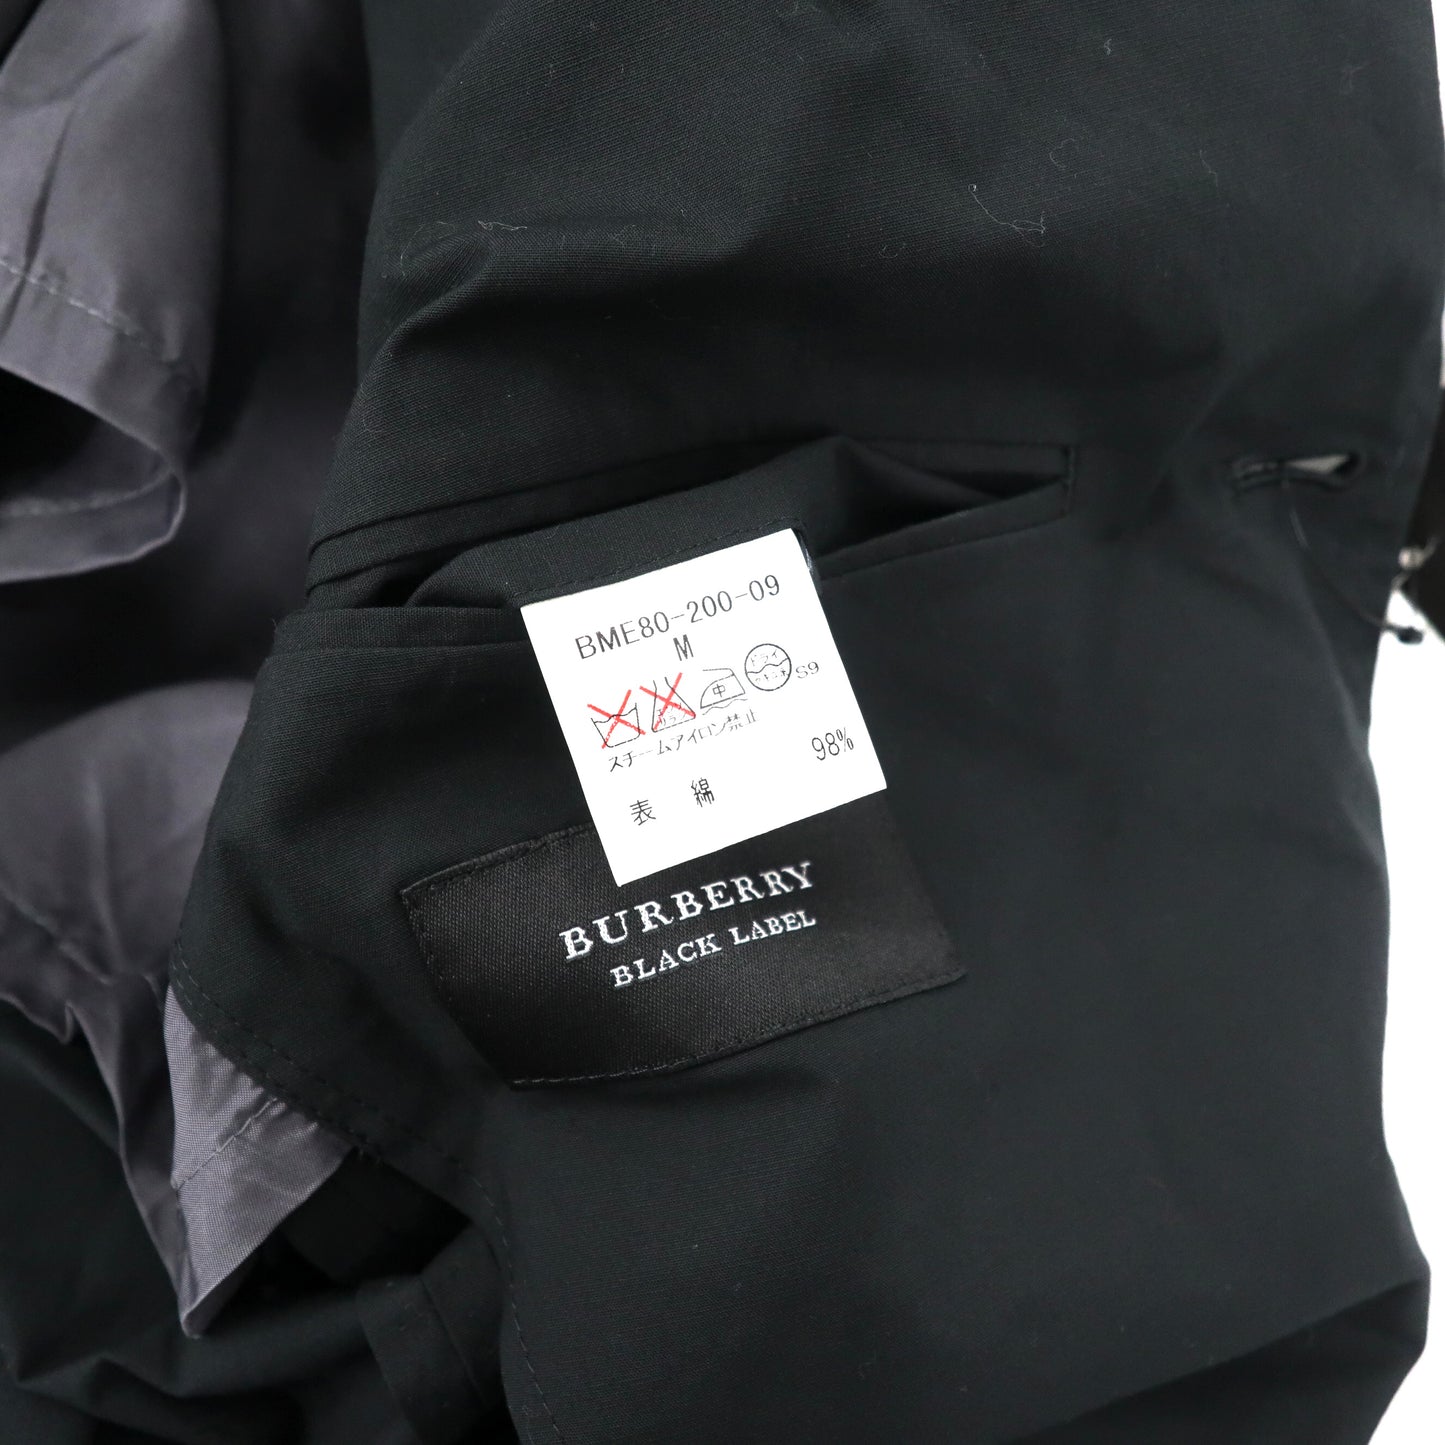 BURBERRY BLACK LABEL 3B Tailored Jacket M Black Cotton BME80-200